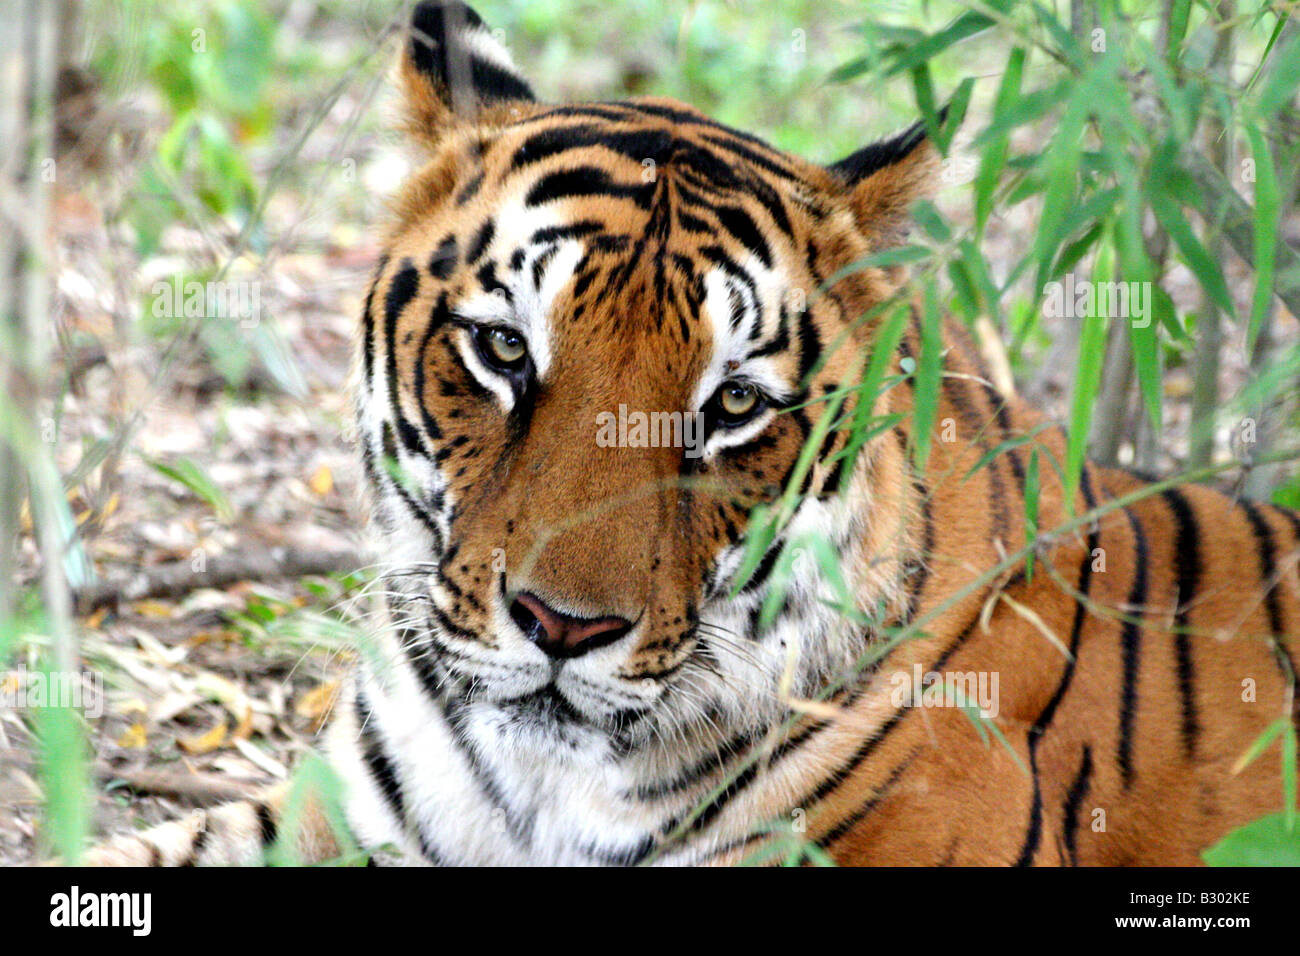 A tiger (Panthera tigris) in Bannerghatta National Park in Karnataka, India. Stock Photo